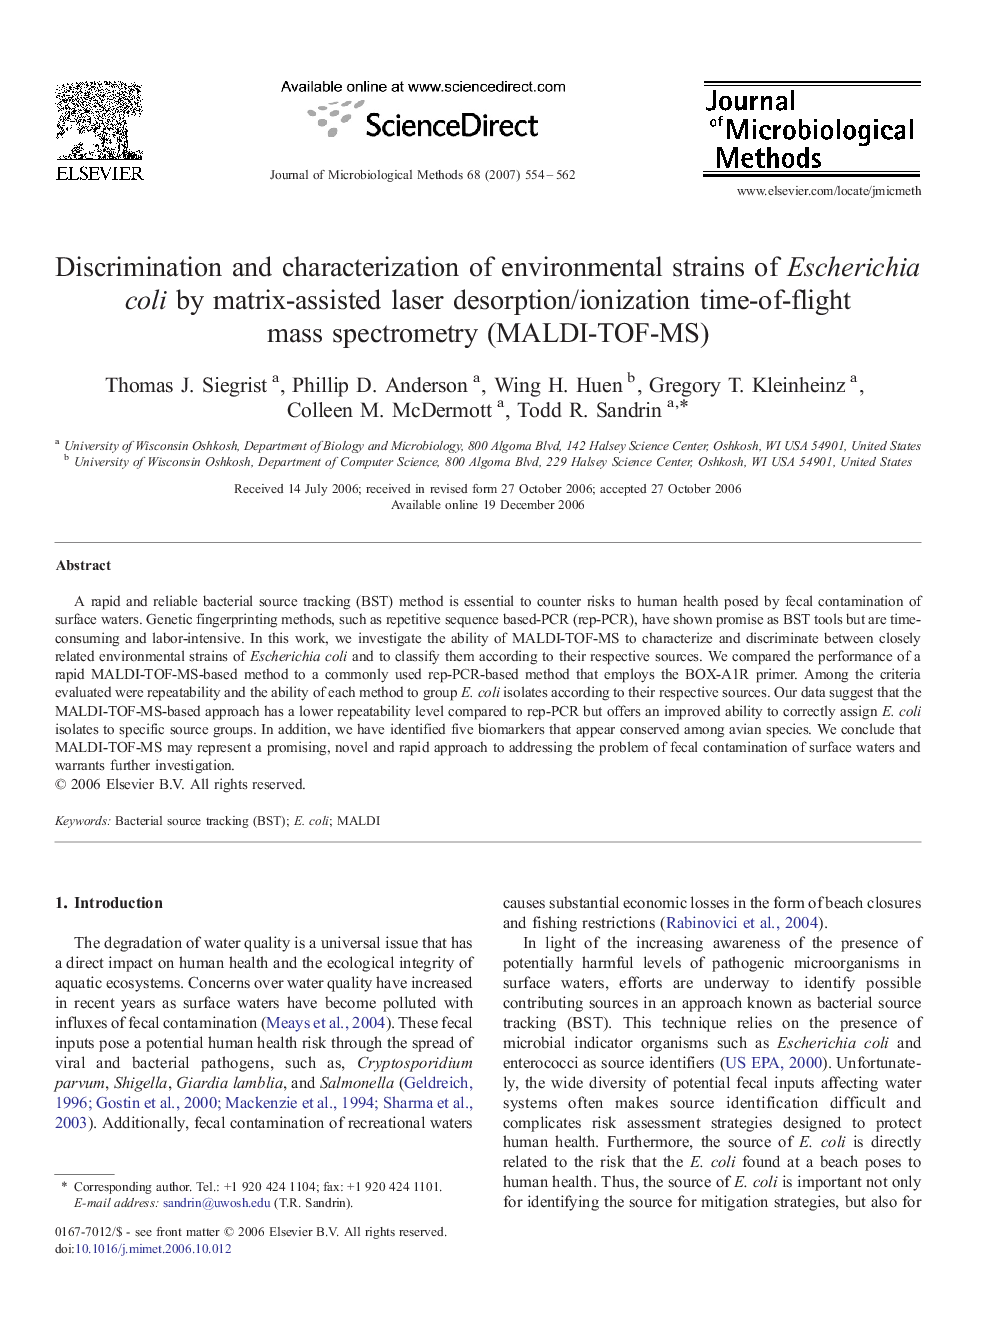 Discrimination and characterization of environmental strains of Escherichia coli by matrix-assisted laser desorption/ionization time-of-flight mass spectrometry (MALDI-TOF-MS)